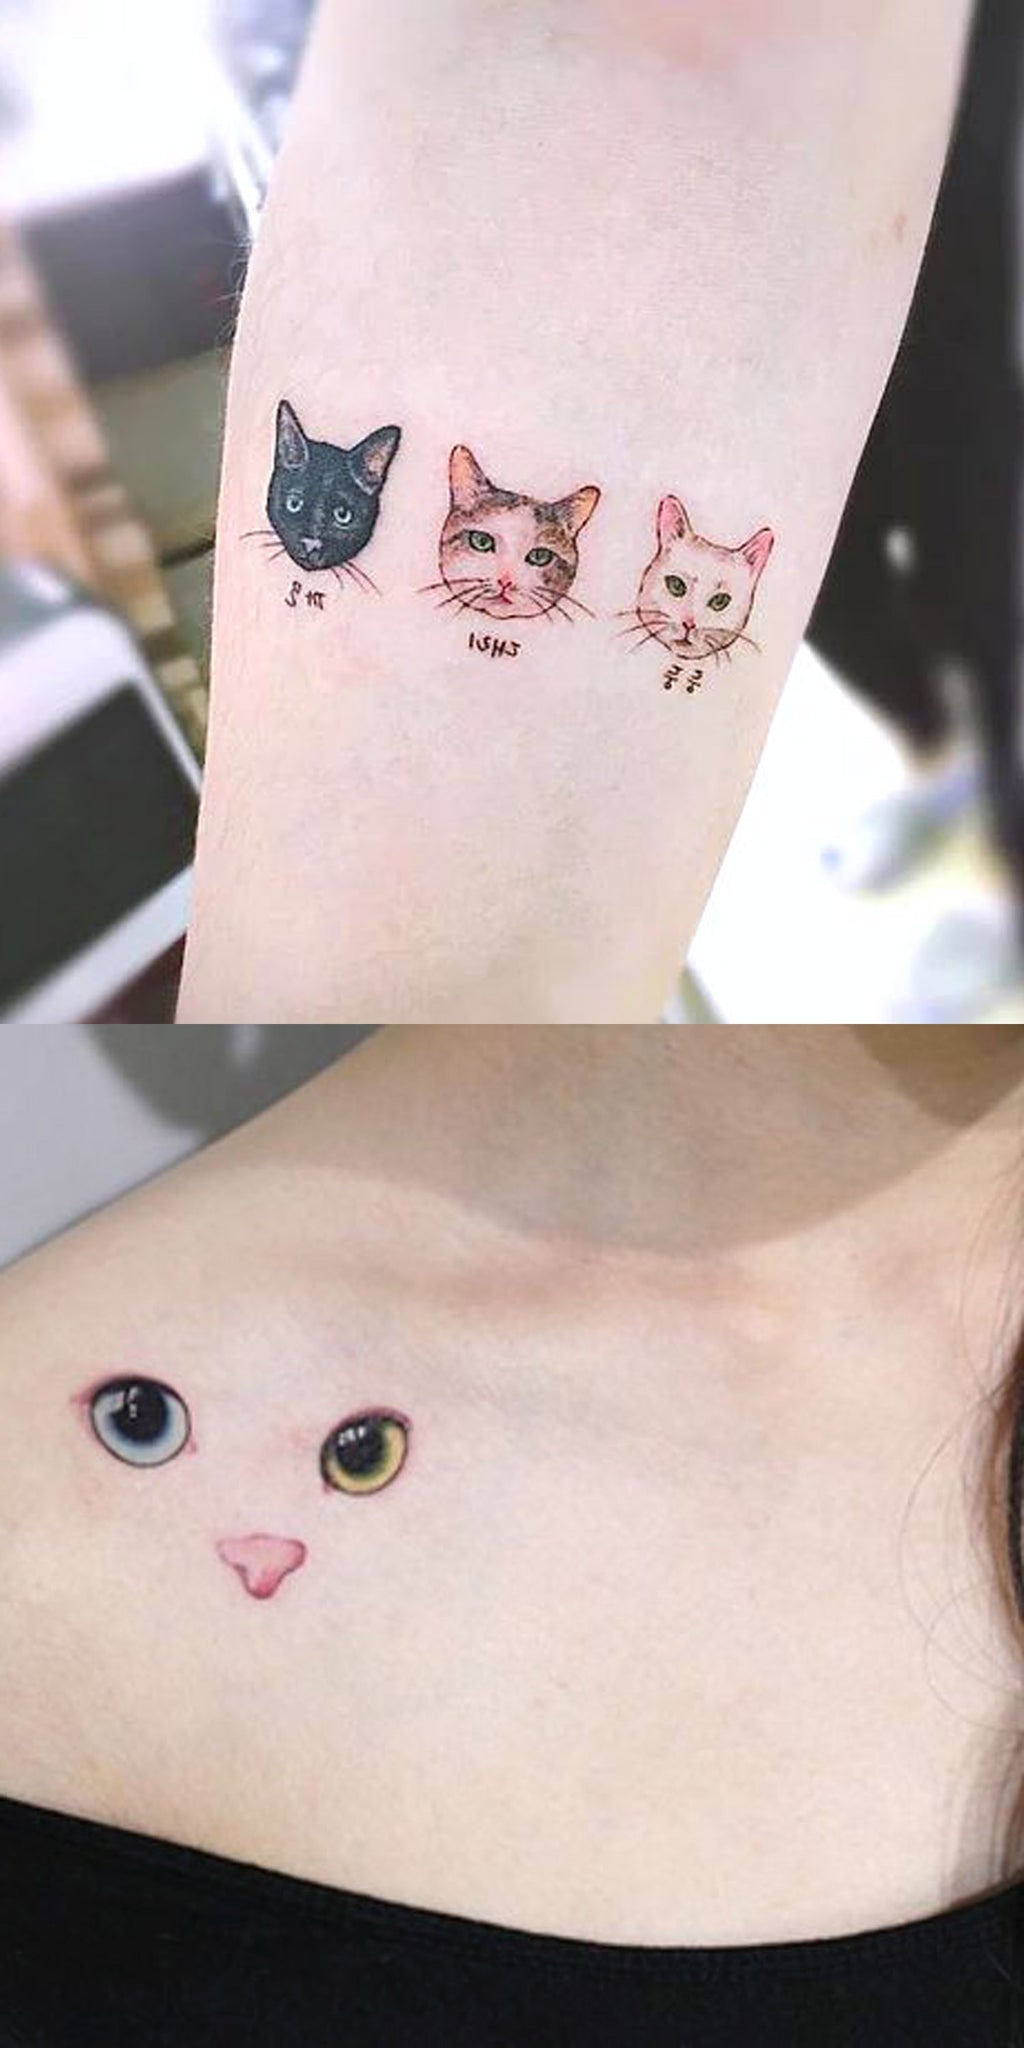 Cool Unique Cat Forearm Tattoo Ideas for Women - Kitty Portrait Face Shoulder Tat -  Ideas de tatuaje de gato para mujeres - www.MyBodiArt.com